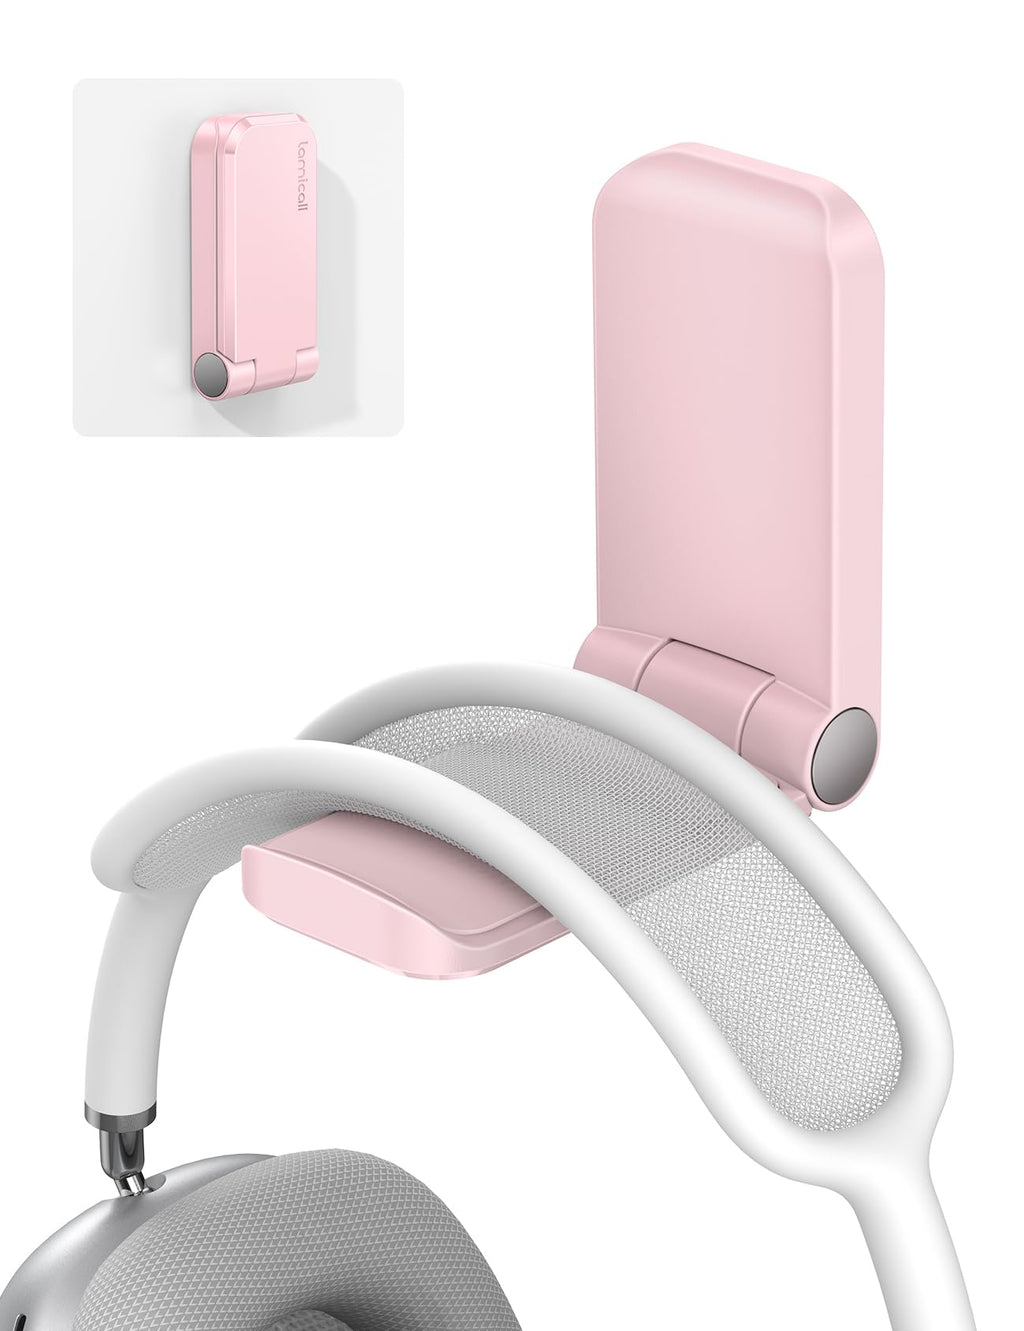  [AUSTRALIA] - Lamicall Headphone Stand, Sticky Headset Hanger - Adhesive Headphone Holder Hook Mount, Headset Stand Holder Clip Under Desk, Earphone Clamp for Airpods Max, HyperX, Sennheiser, Pink